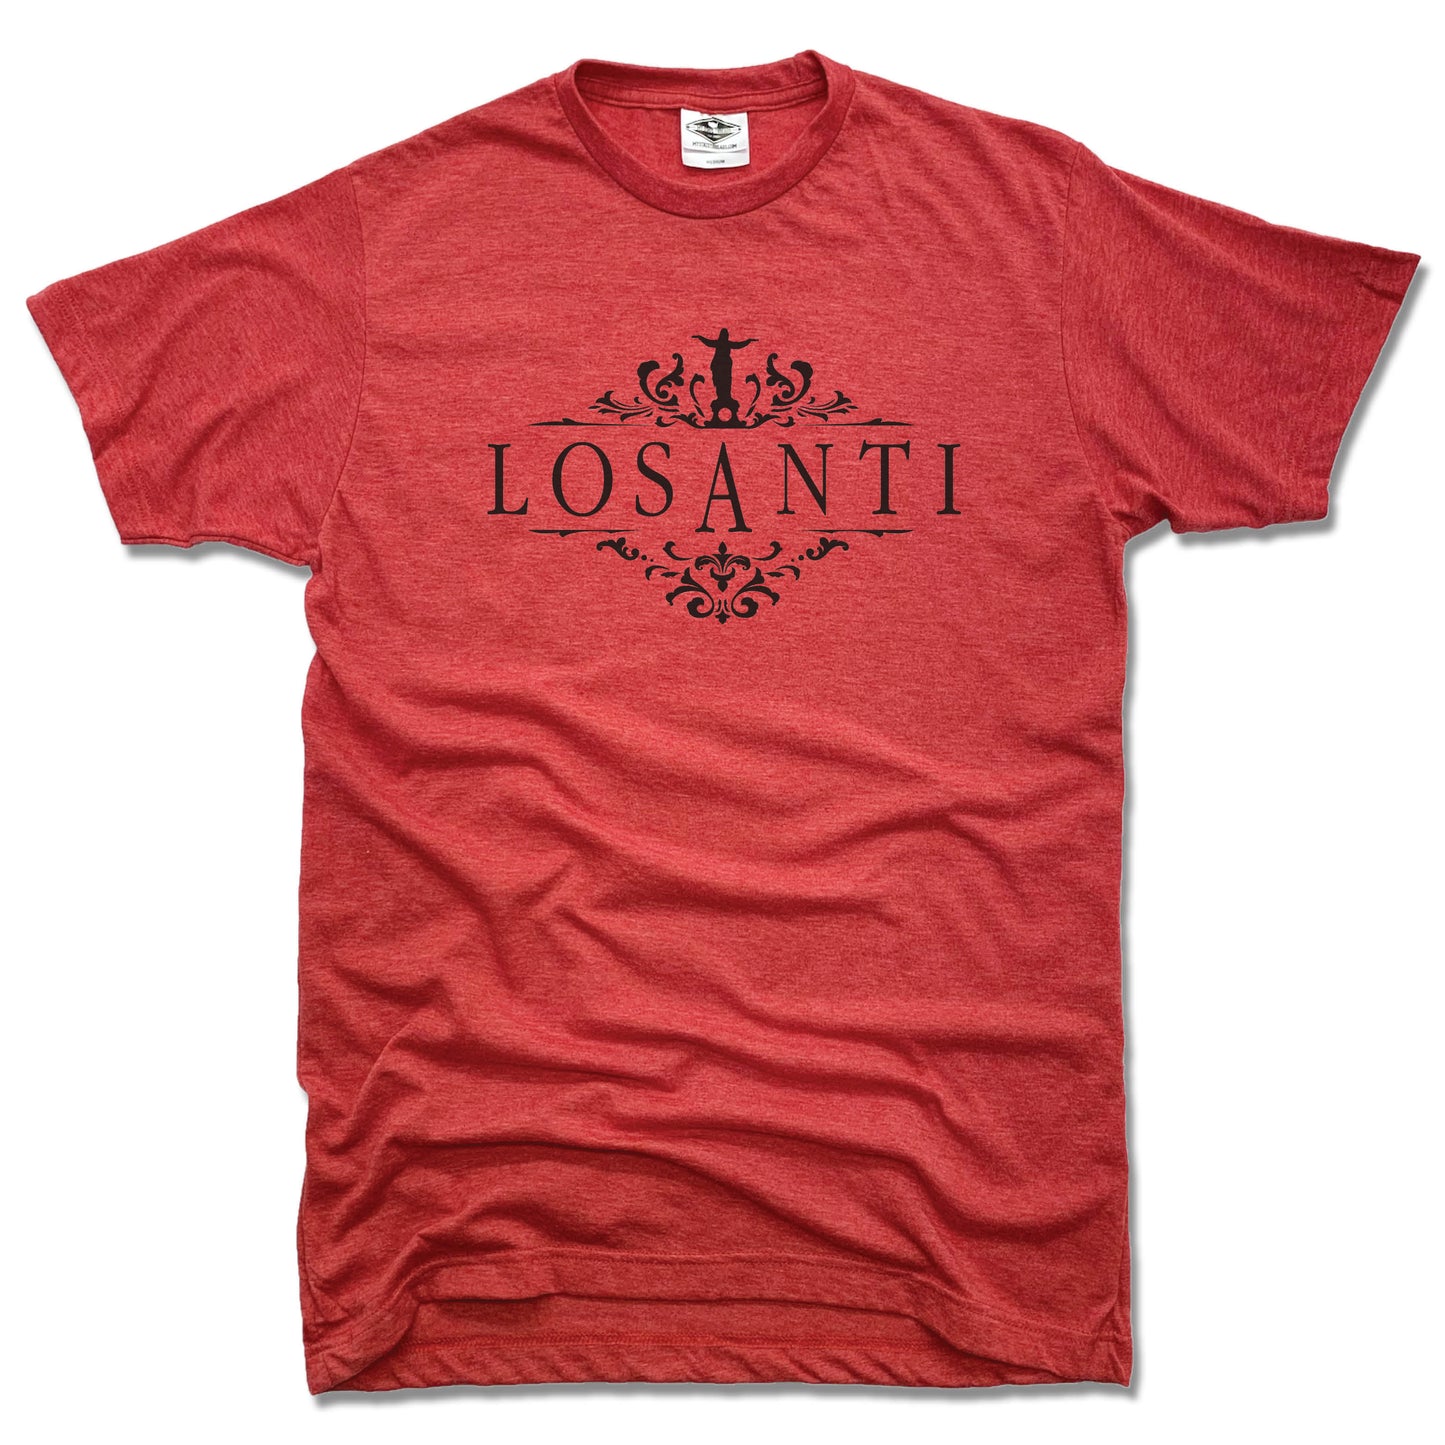 Losanti Logo | UNISEX RED TEE